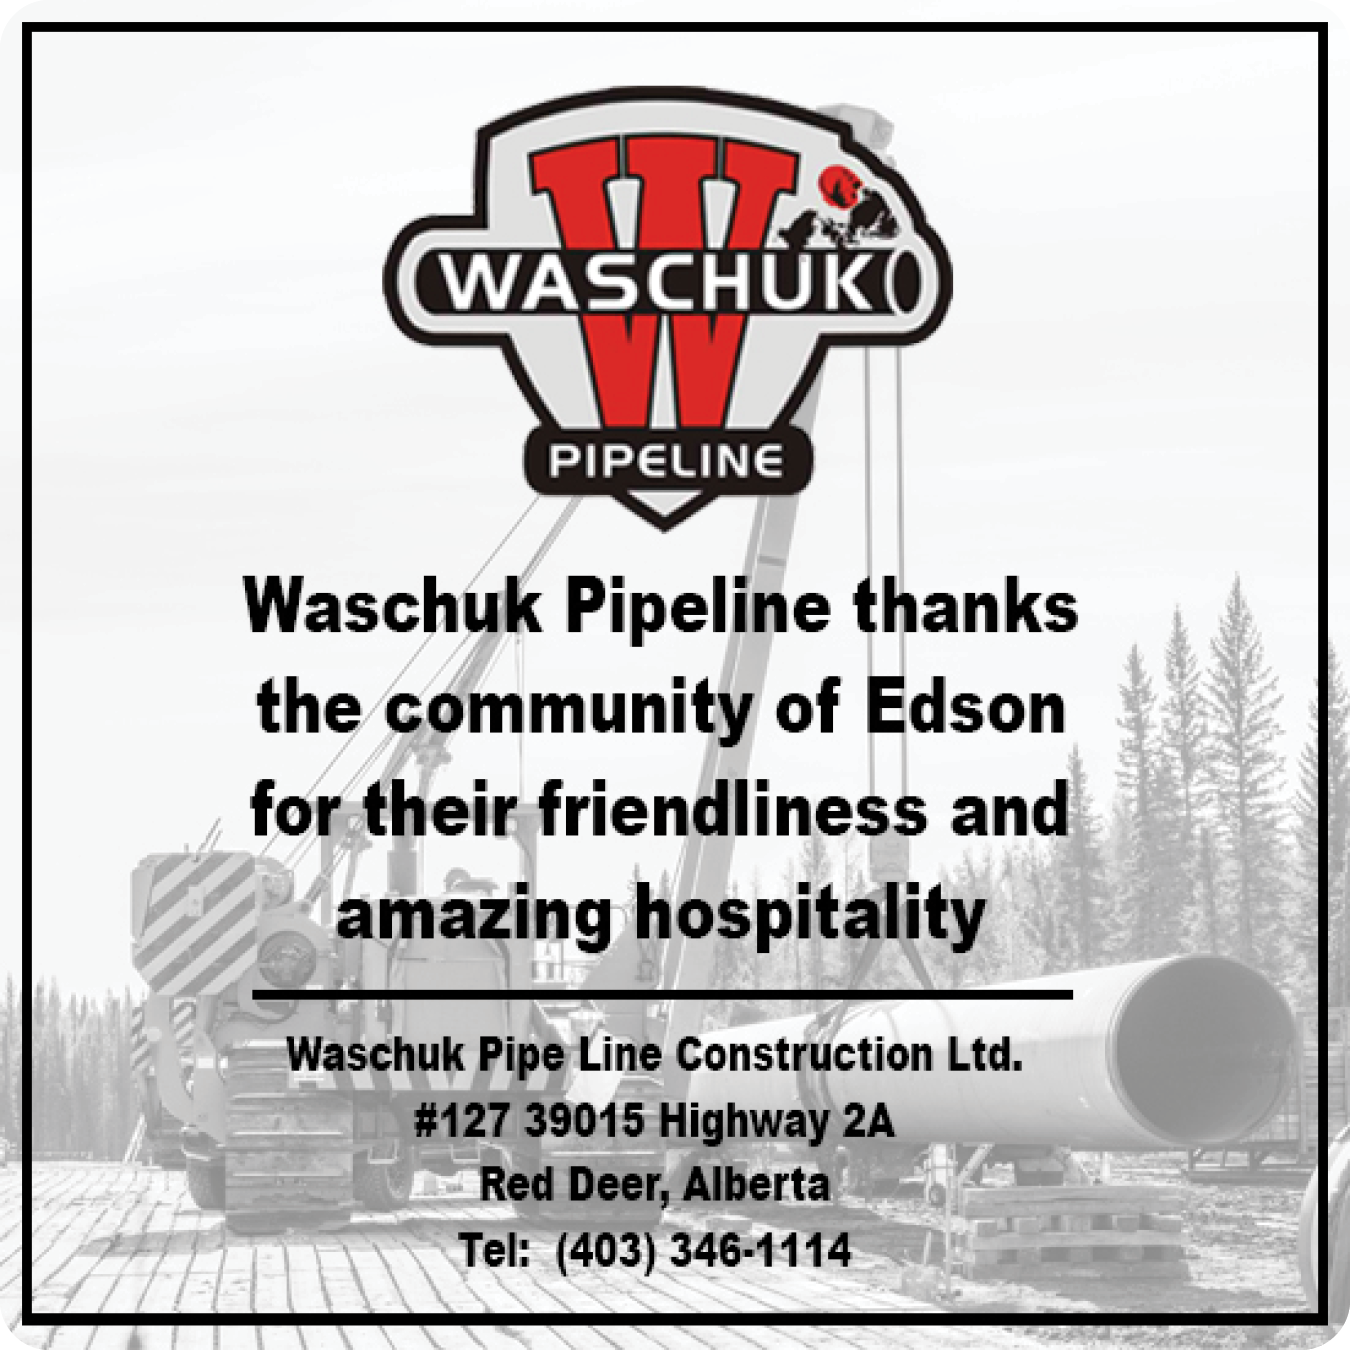 Waschuk Pipe Line Construction Ltd